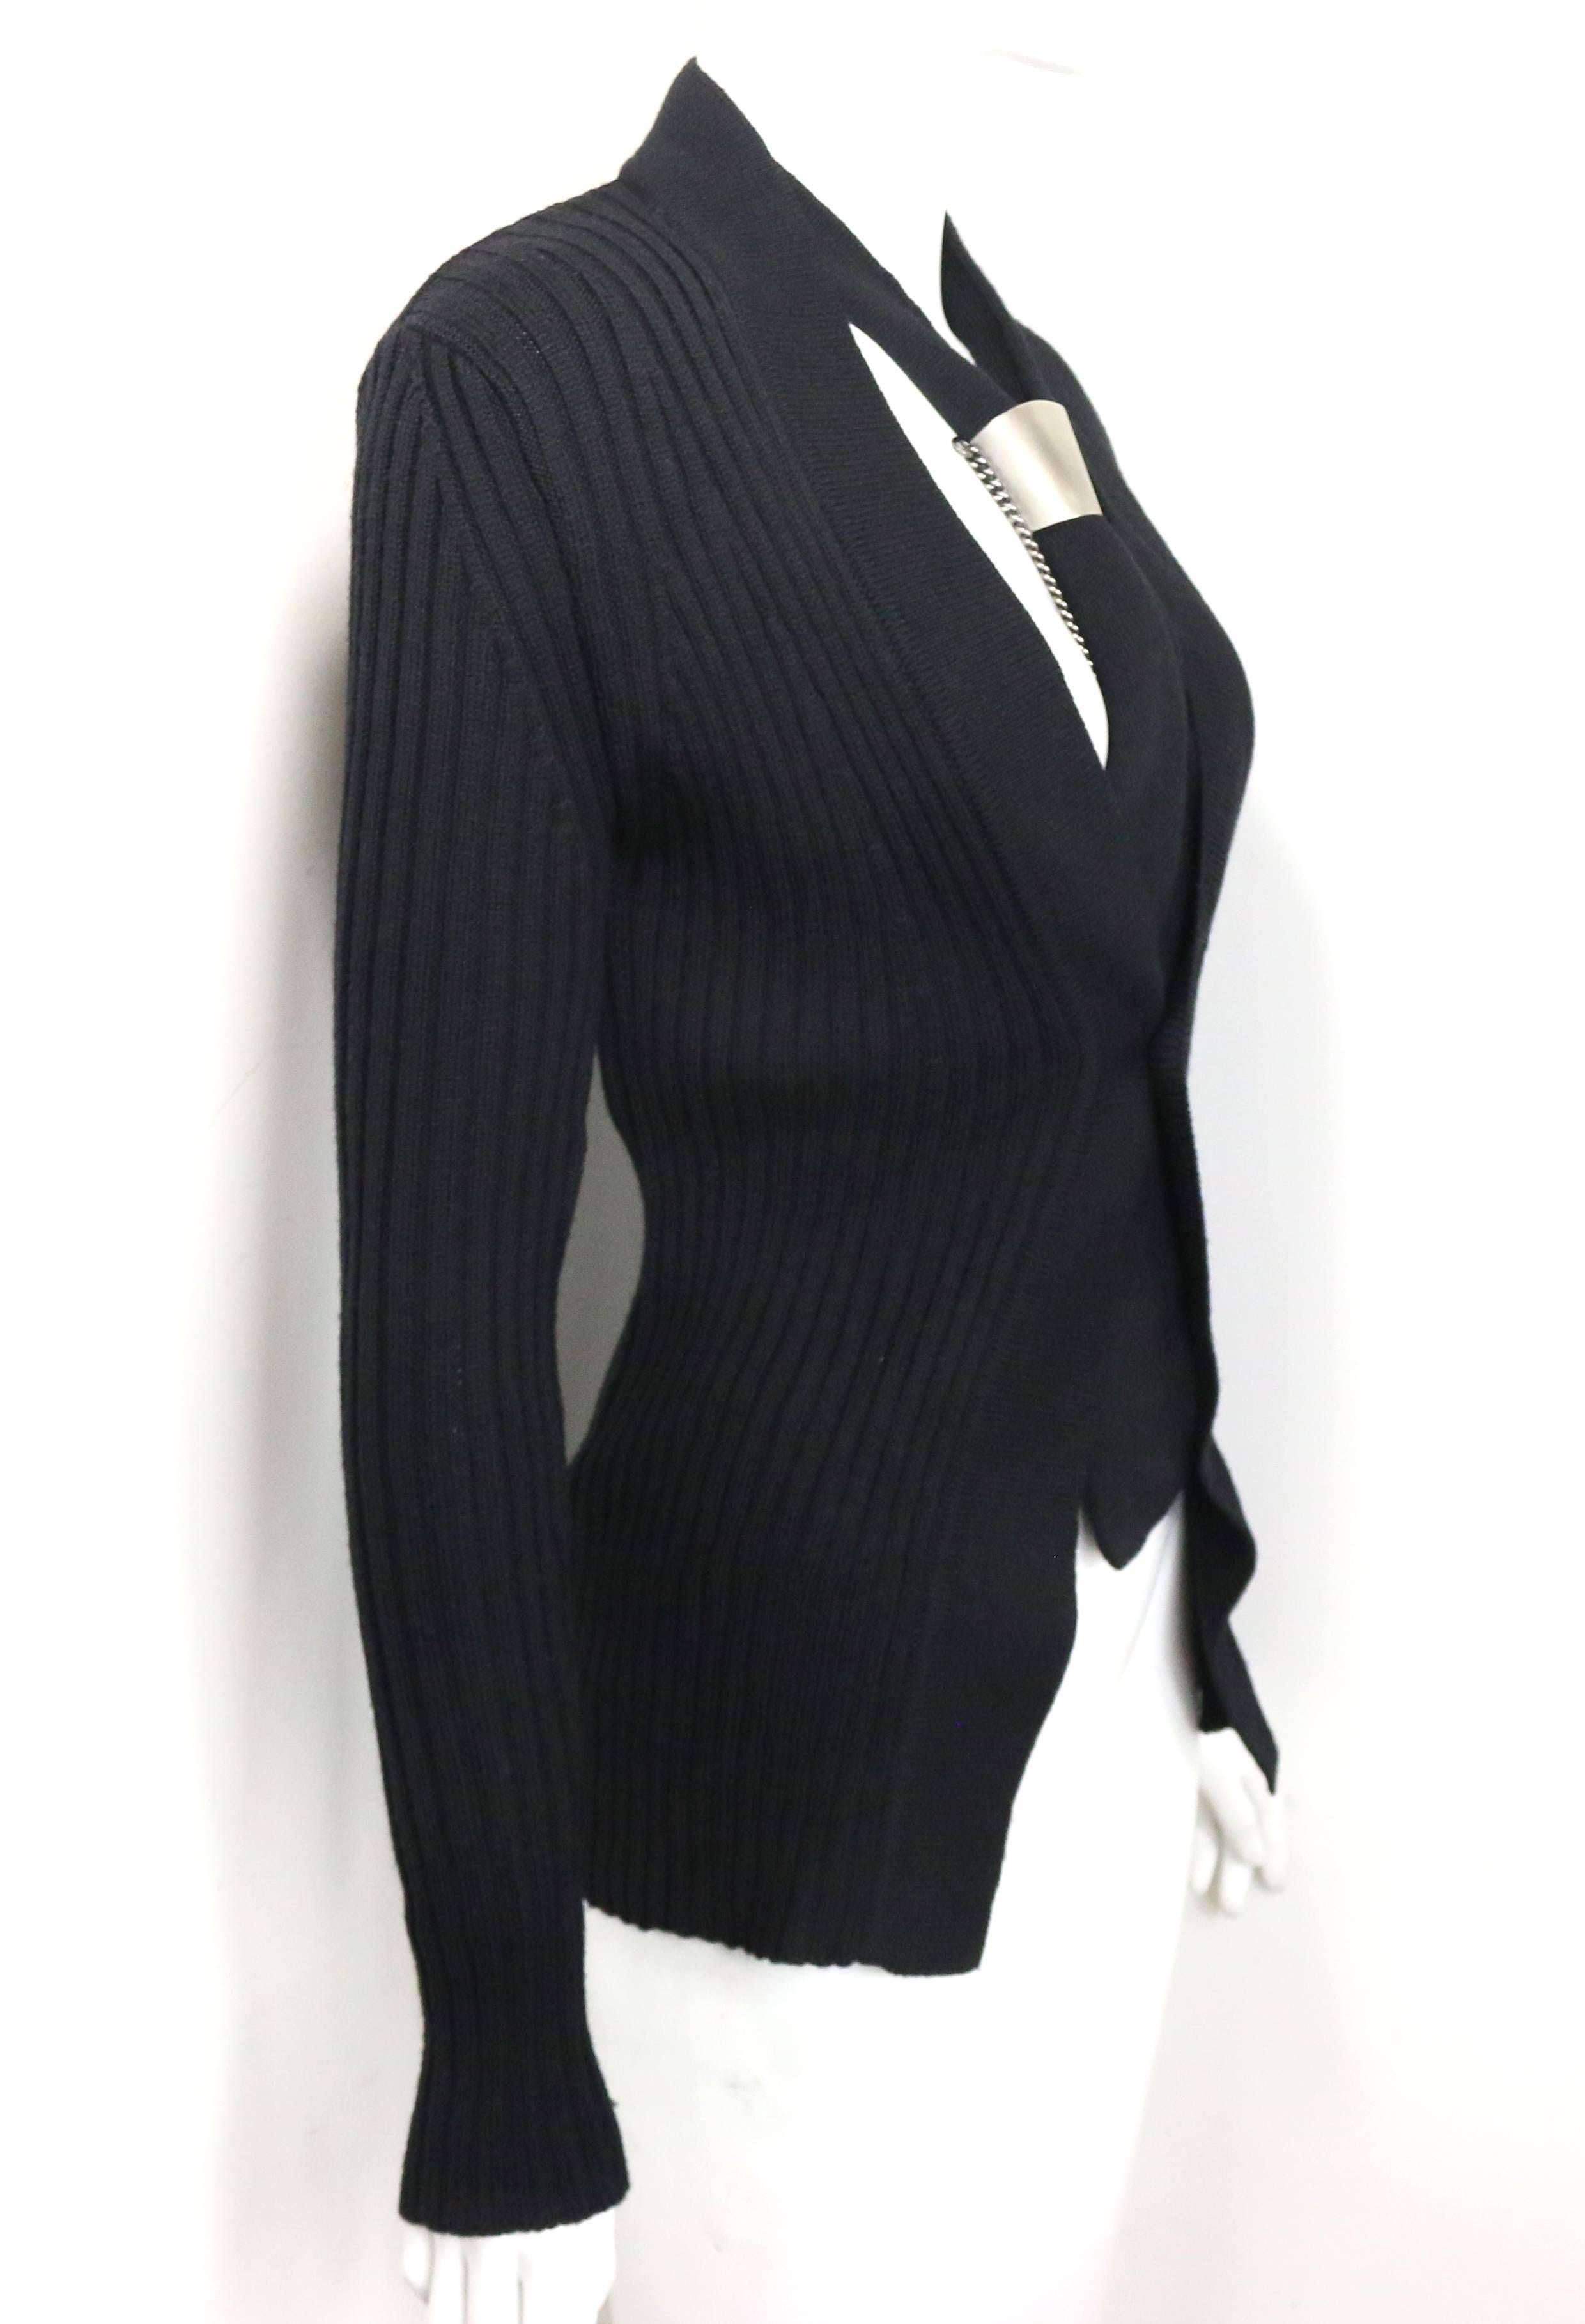 Women's or Men's Dirk Bikkembergs Black Wool Cardigan with Silver Toned Hardware Tie Clip 